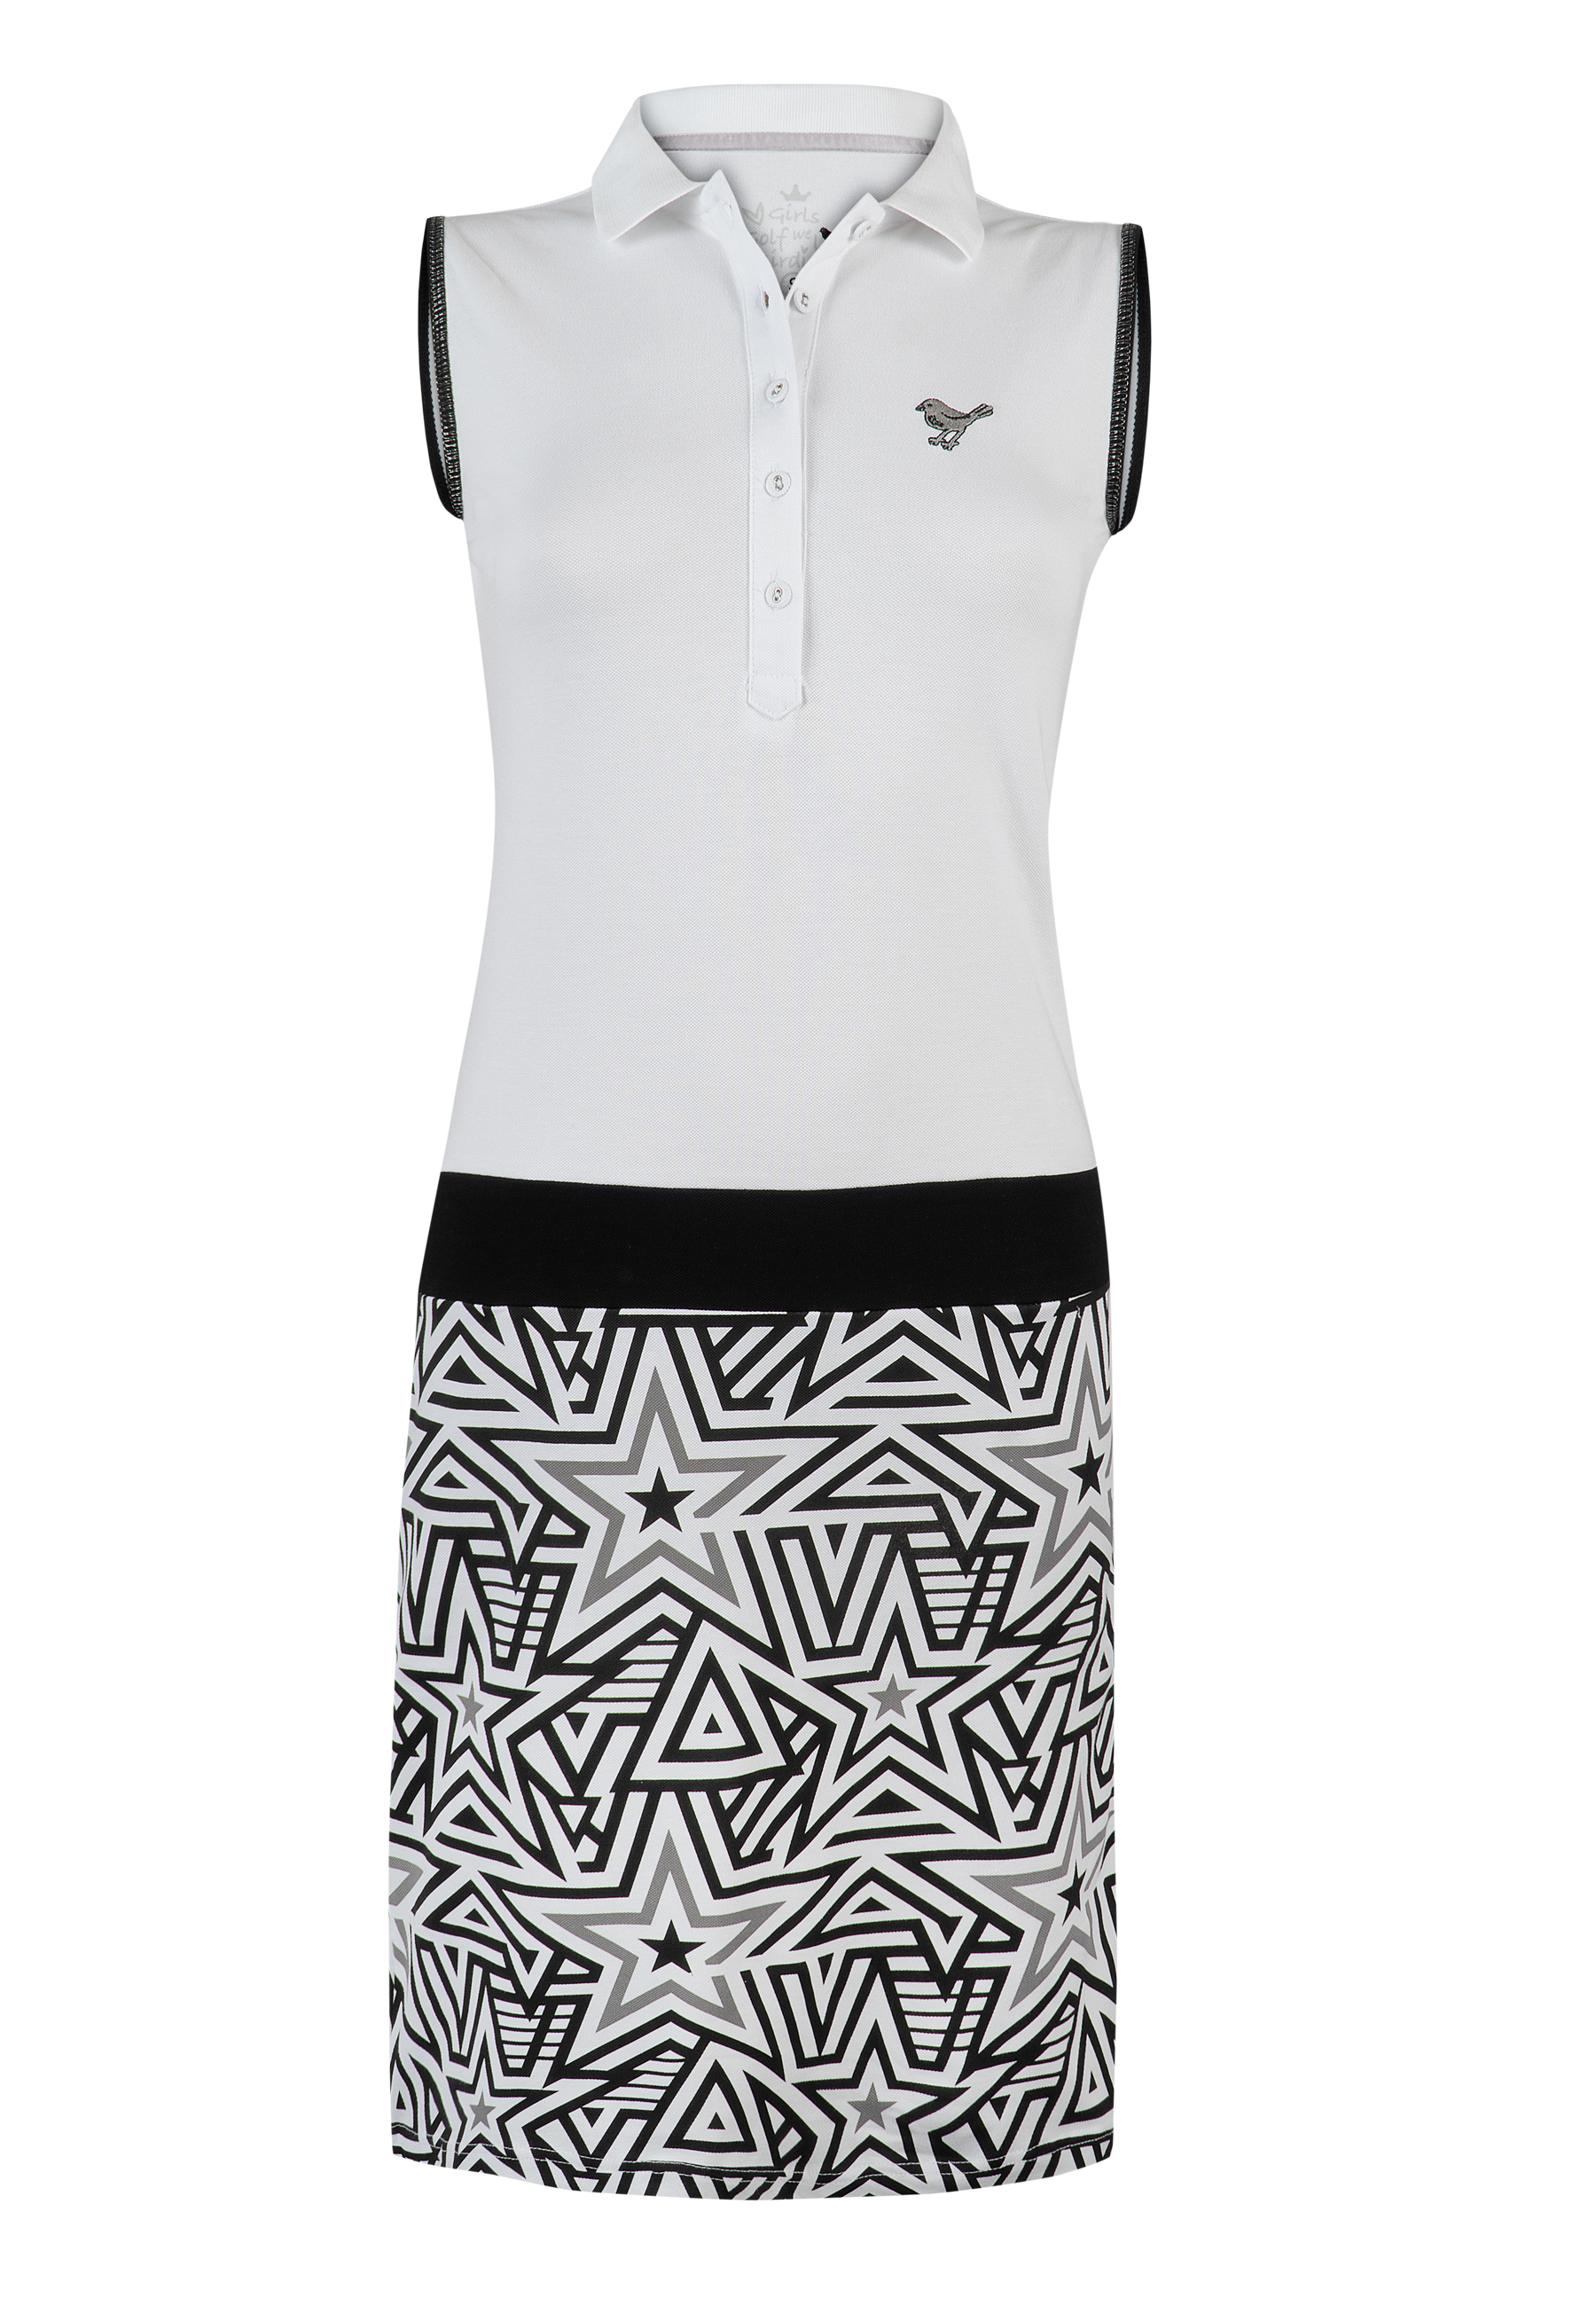 girls golf polo dress sleeveless  'GALAXY BW'